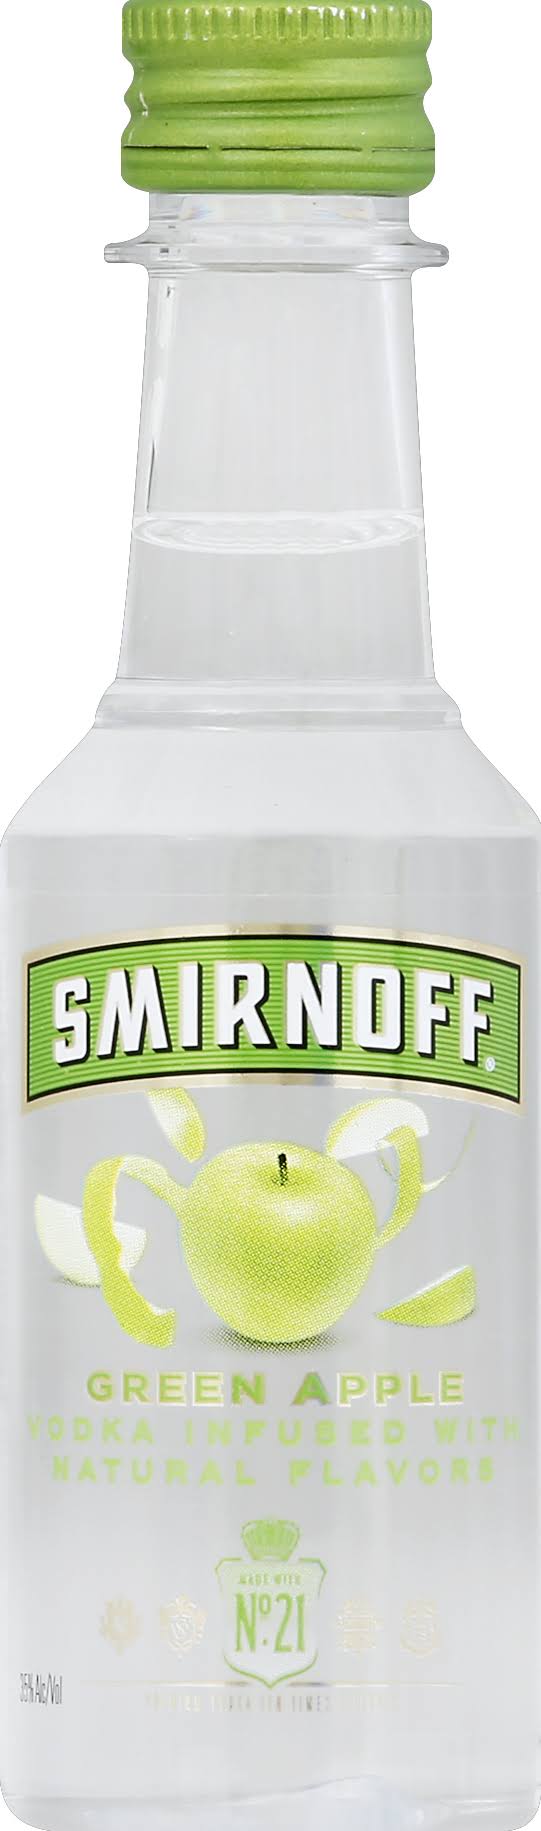 Smirnoff Green Apple Vodka (50 ml)